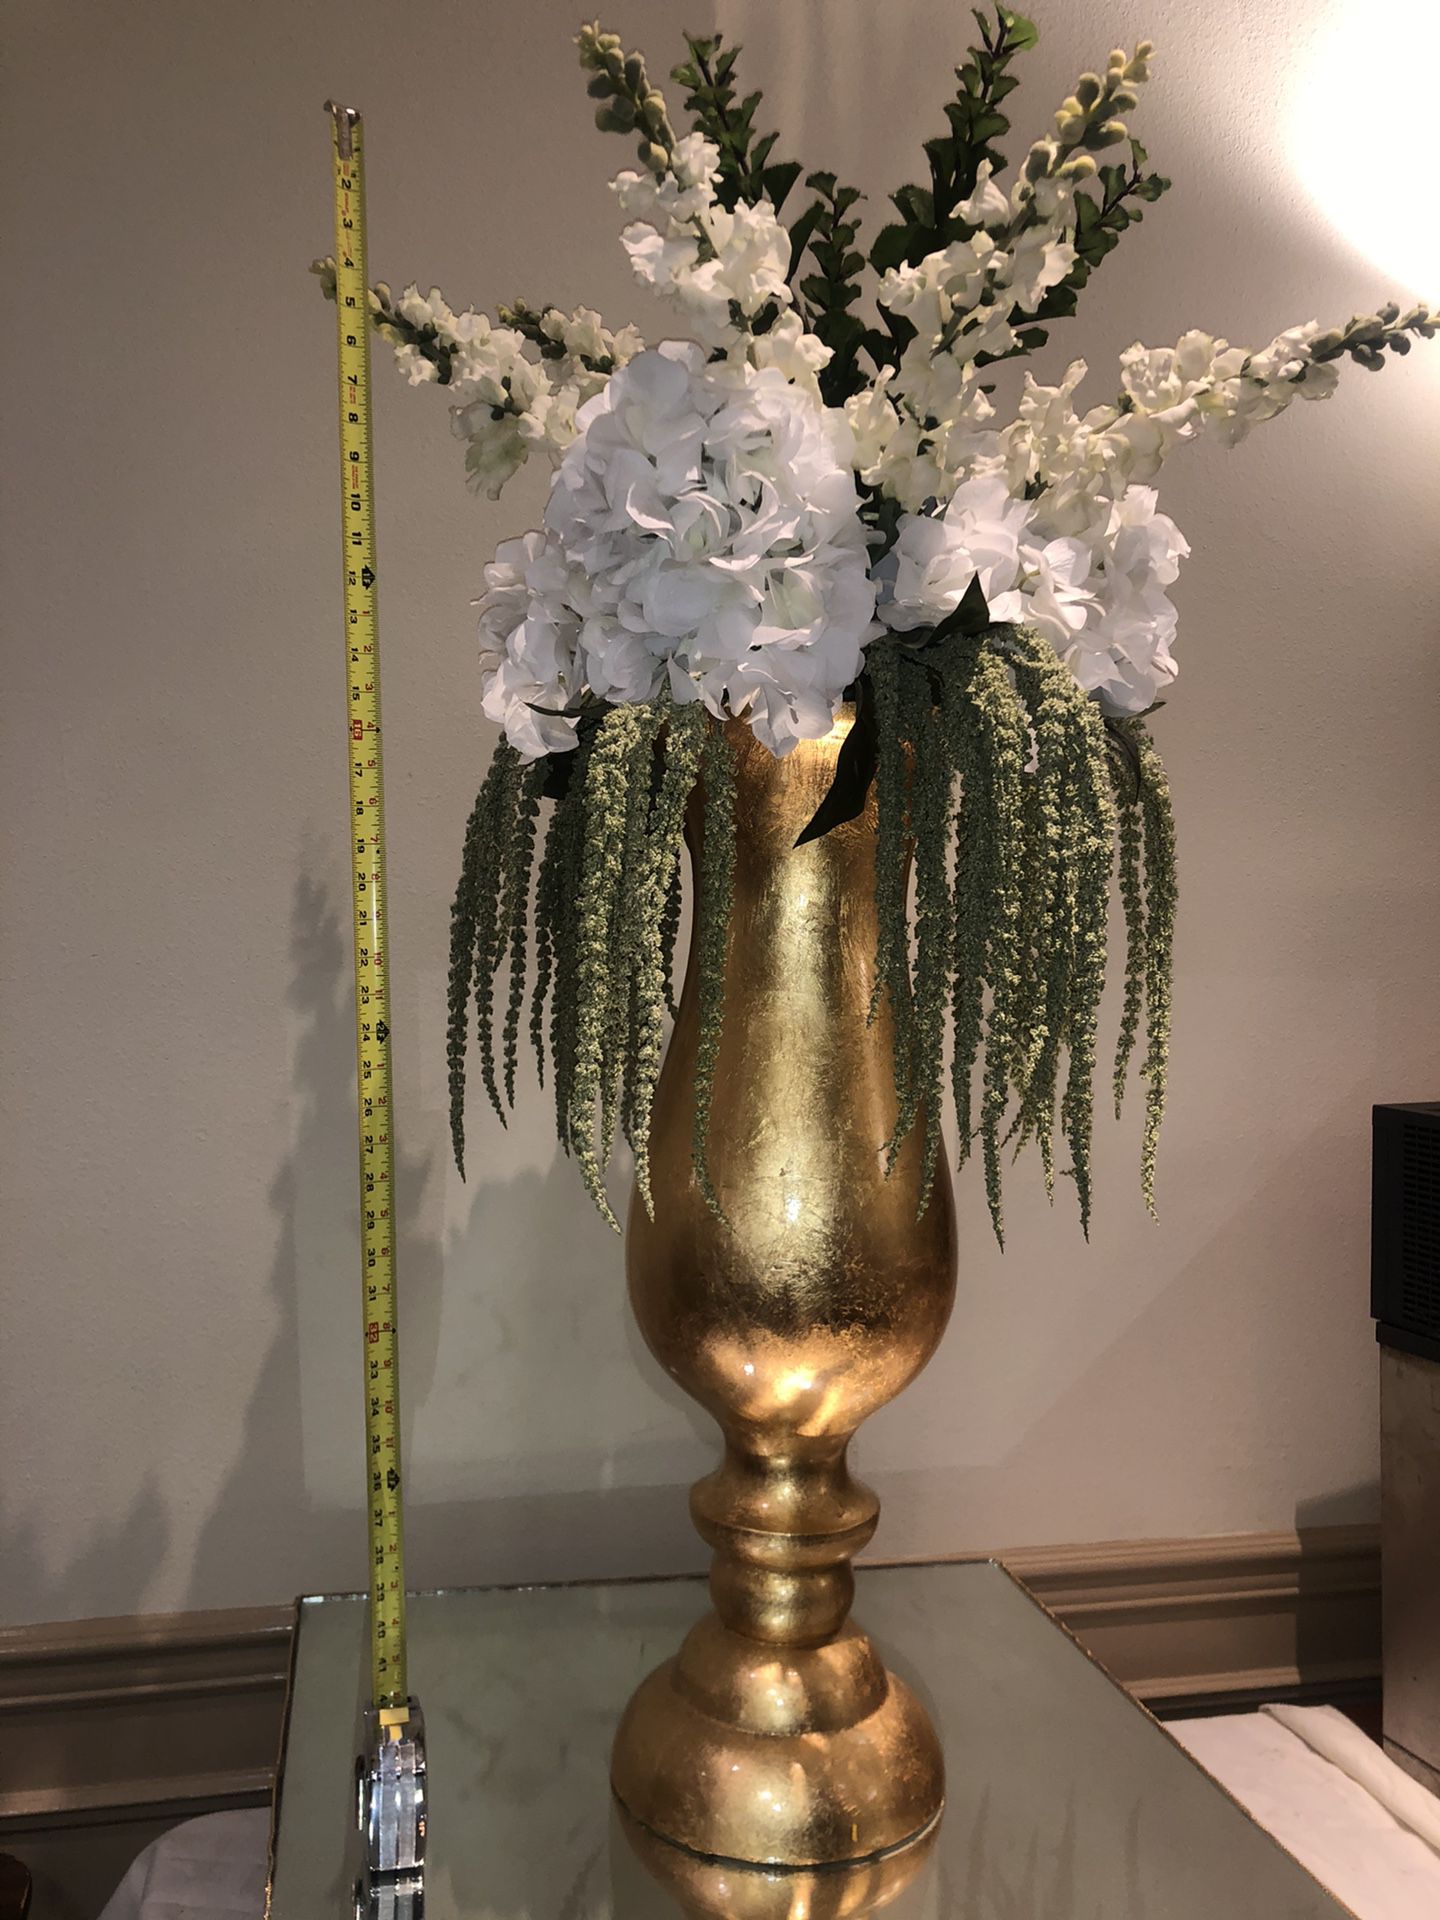 Oversized vase with flowers